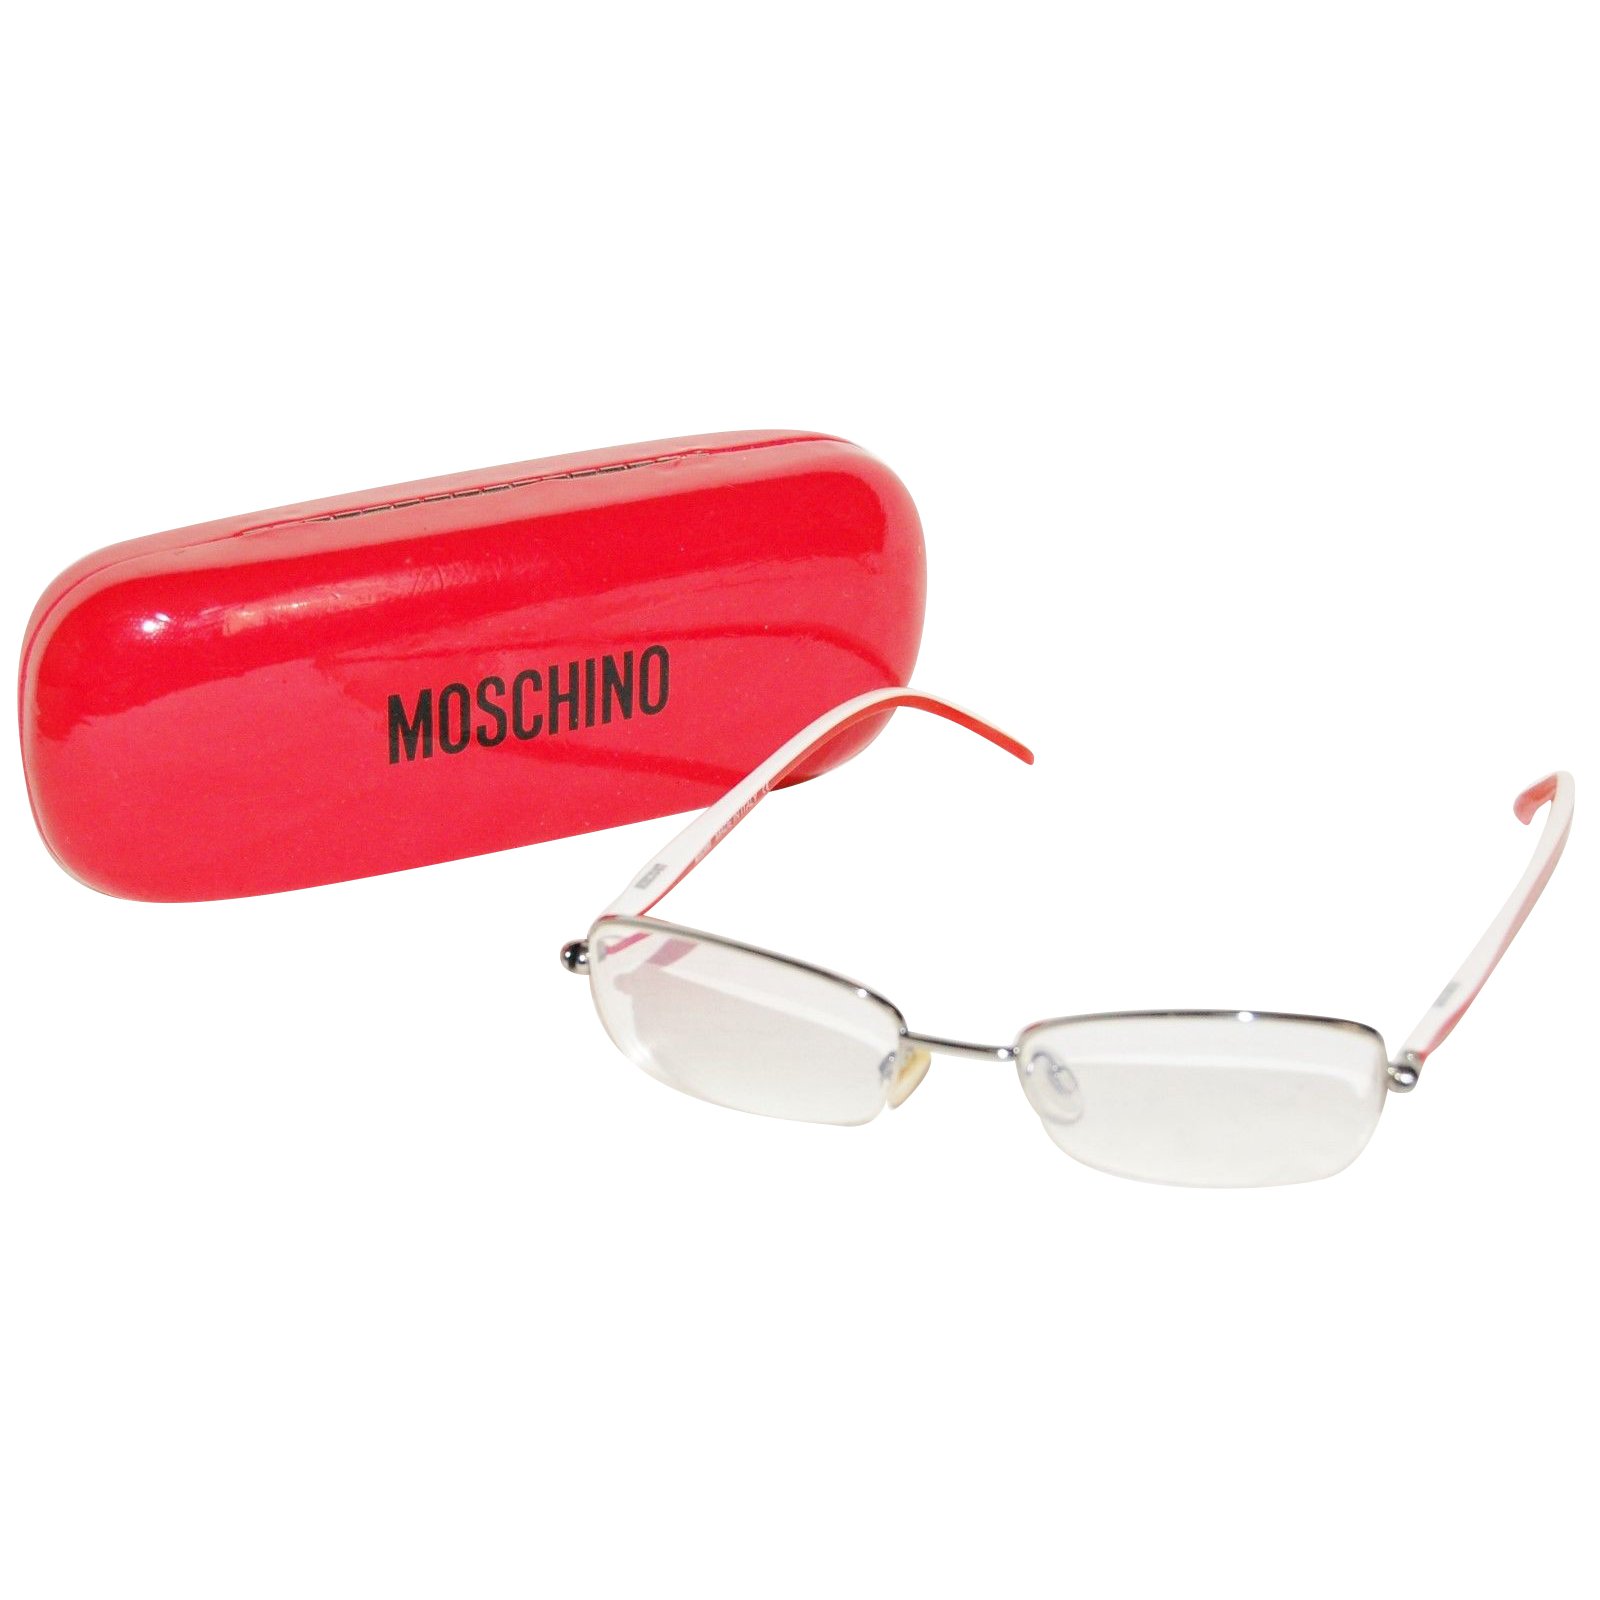 moschino red glasses